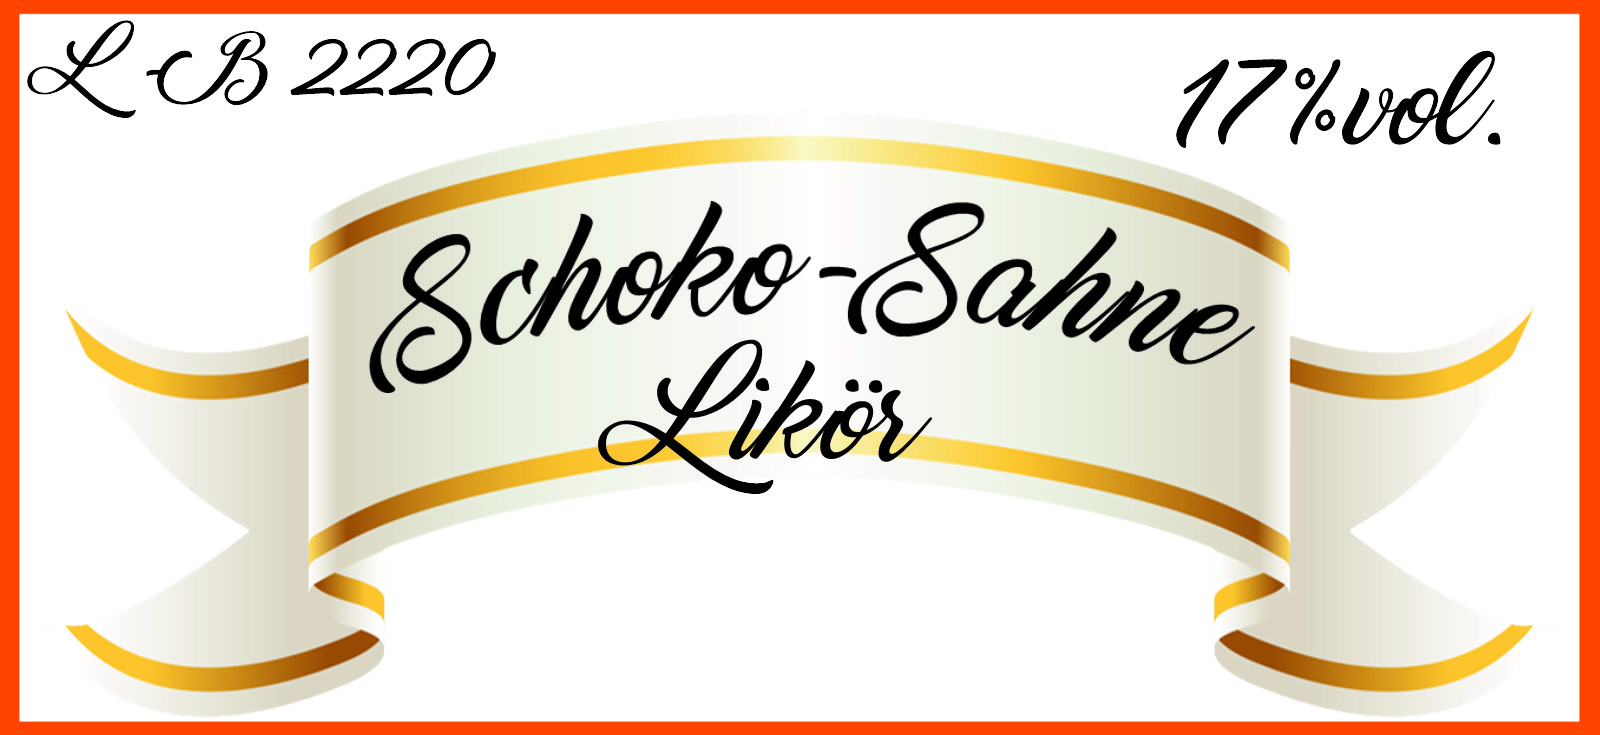 Schoko-Sahne-Likoer